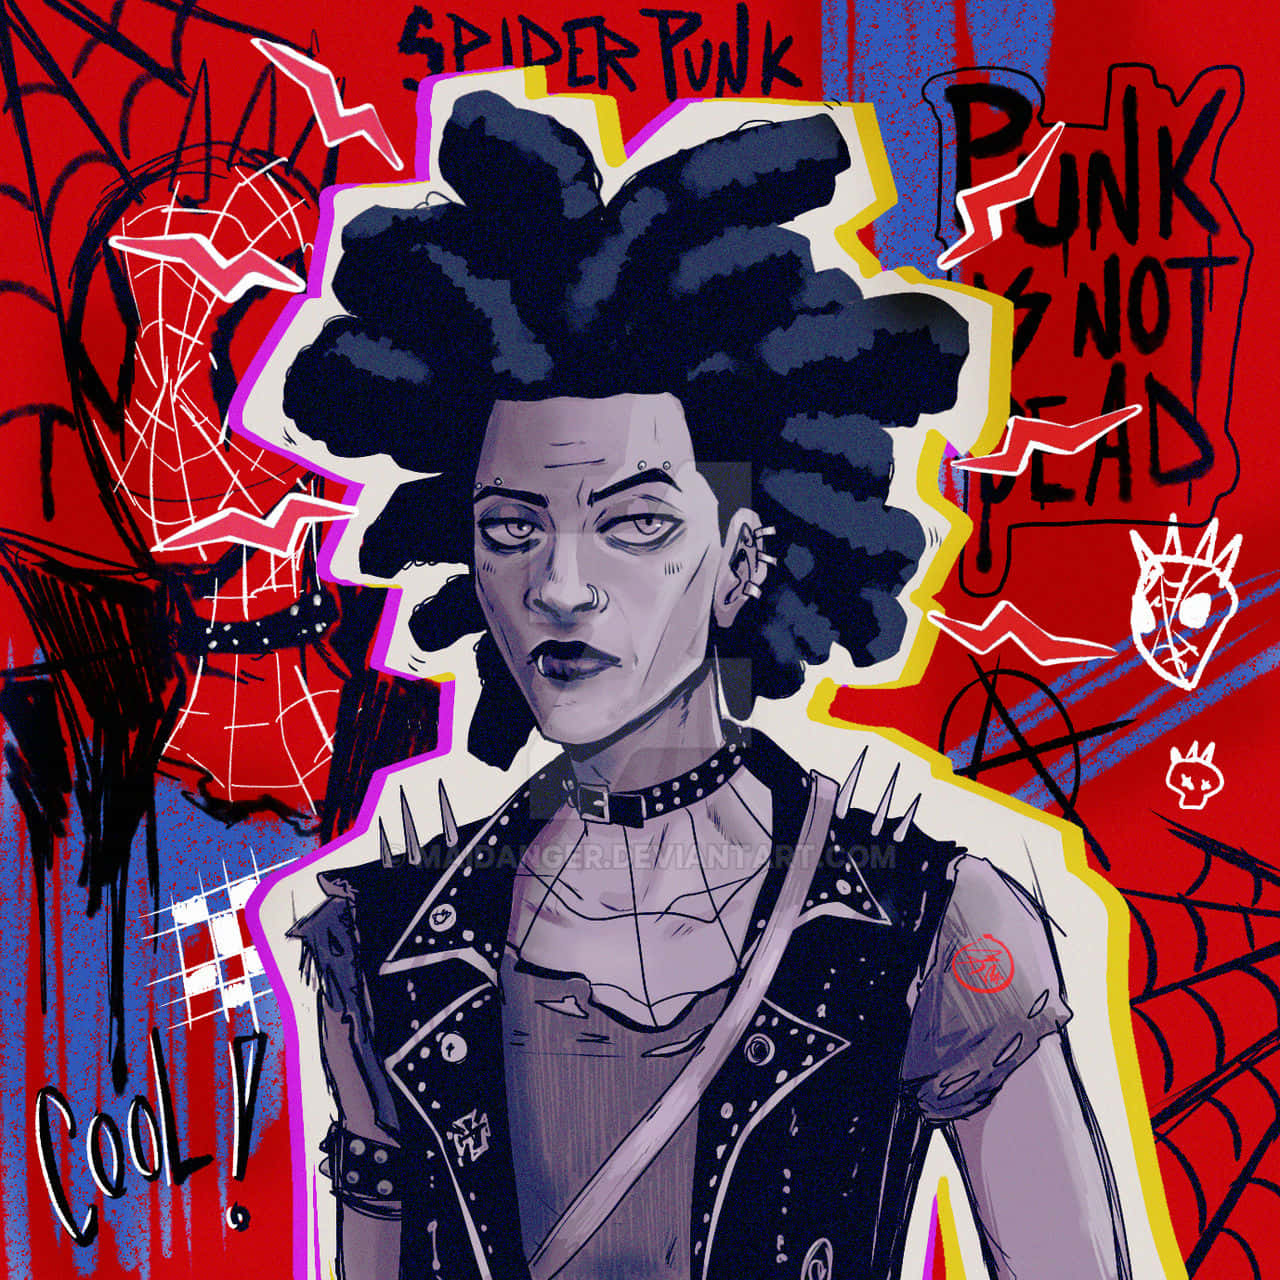 Spider Punk Artwork Wallpaper